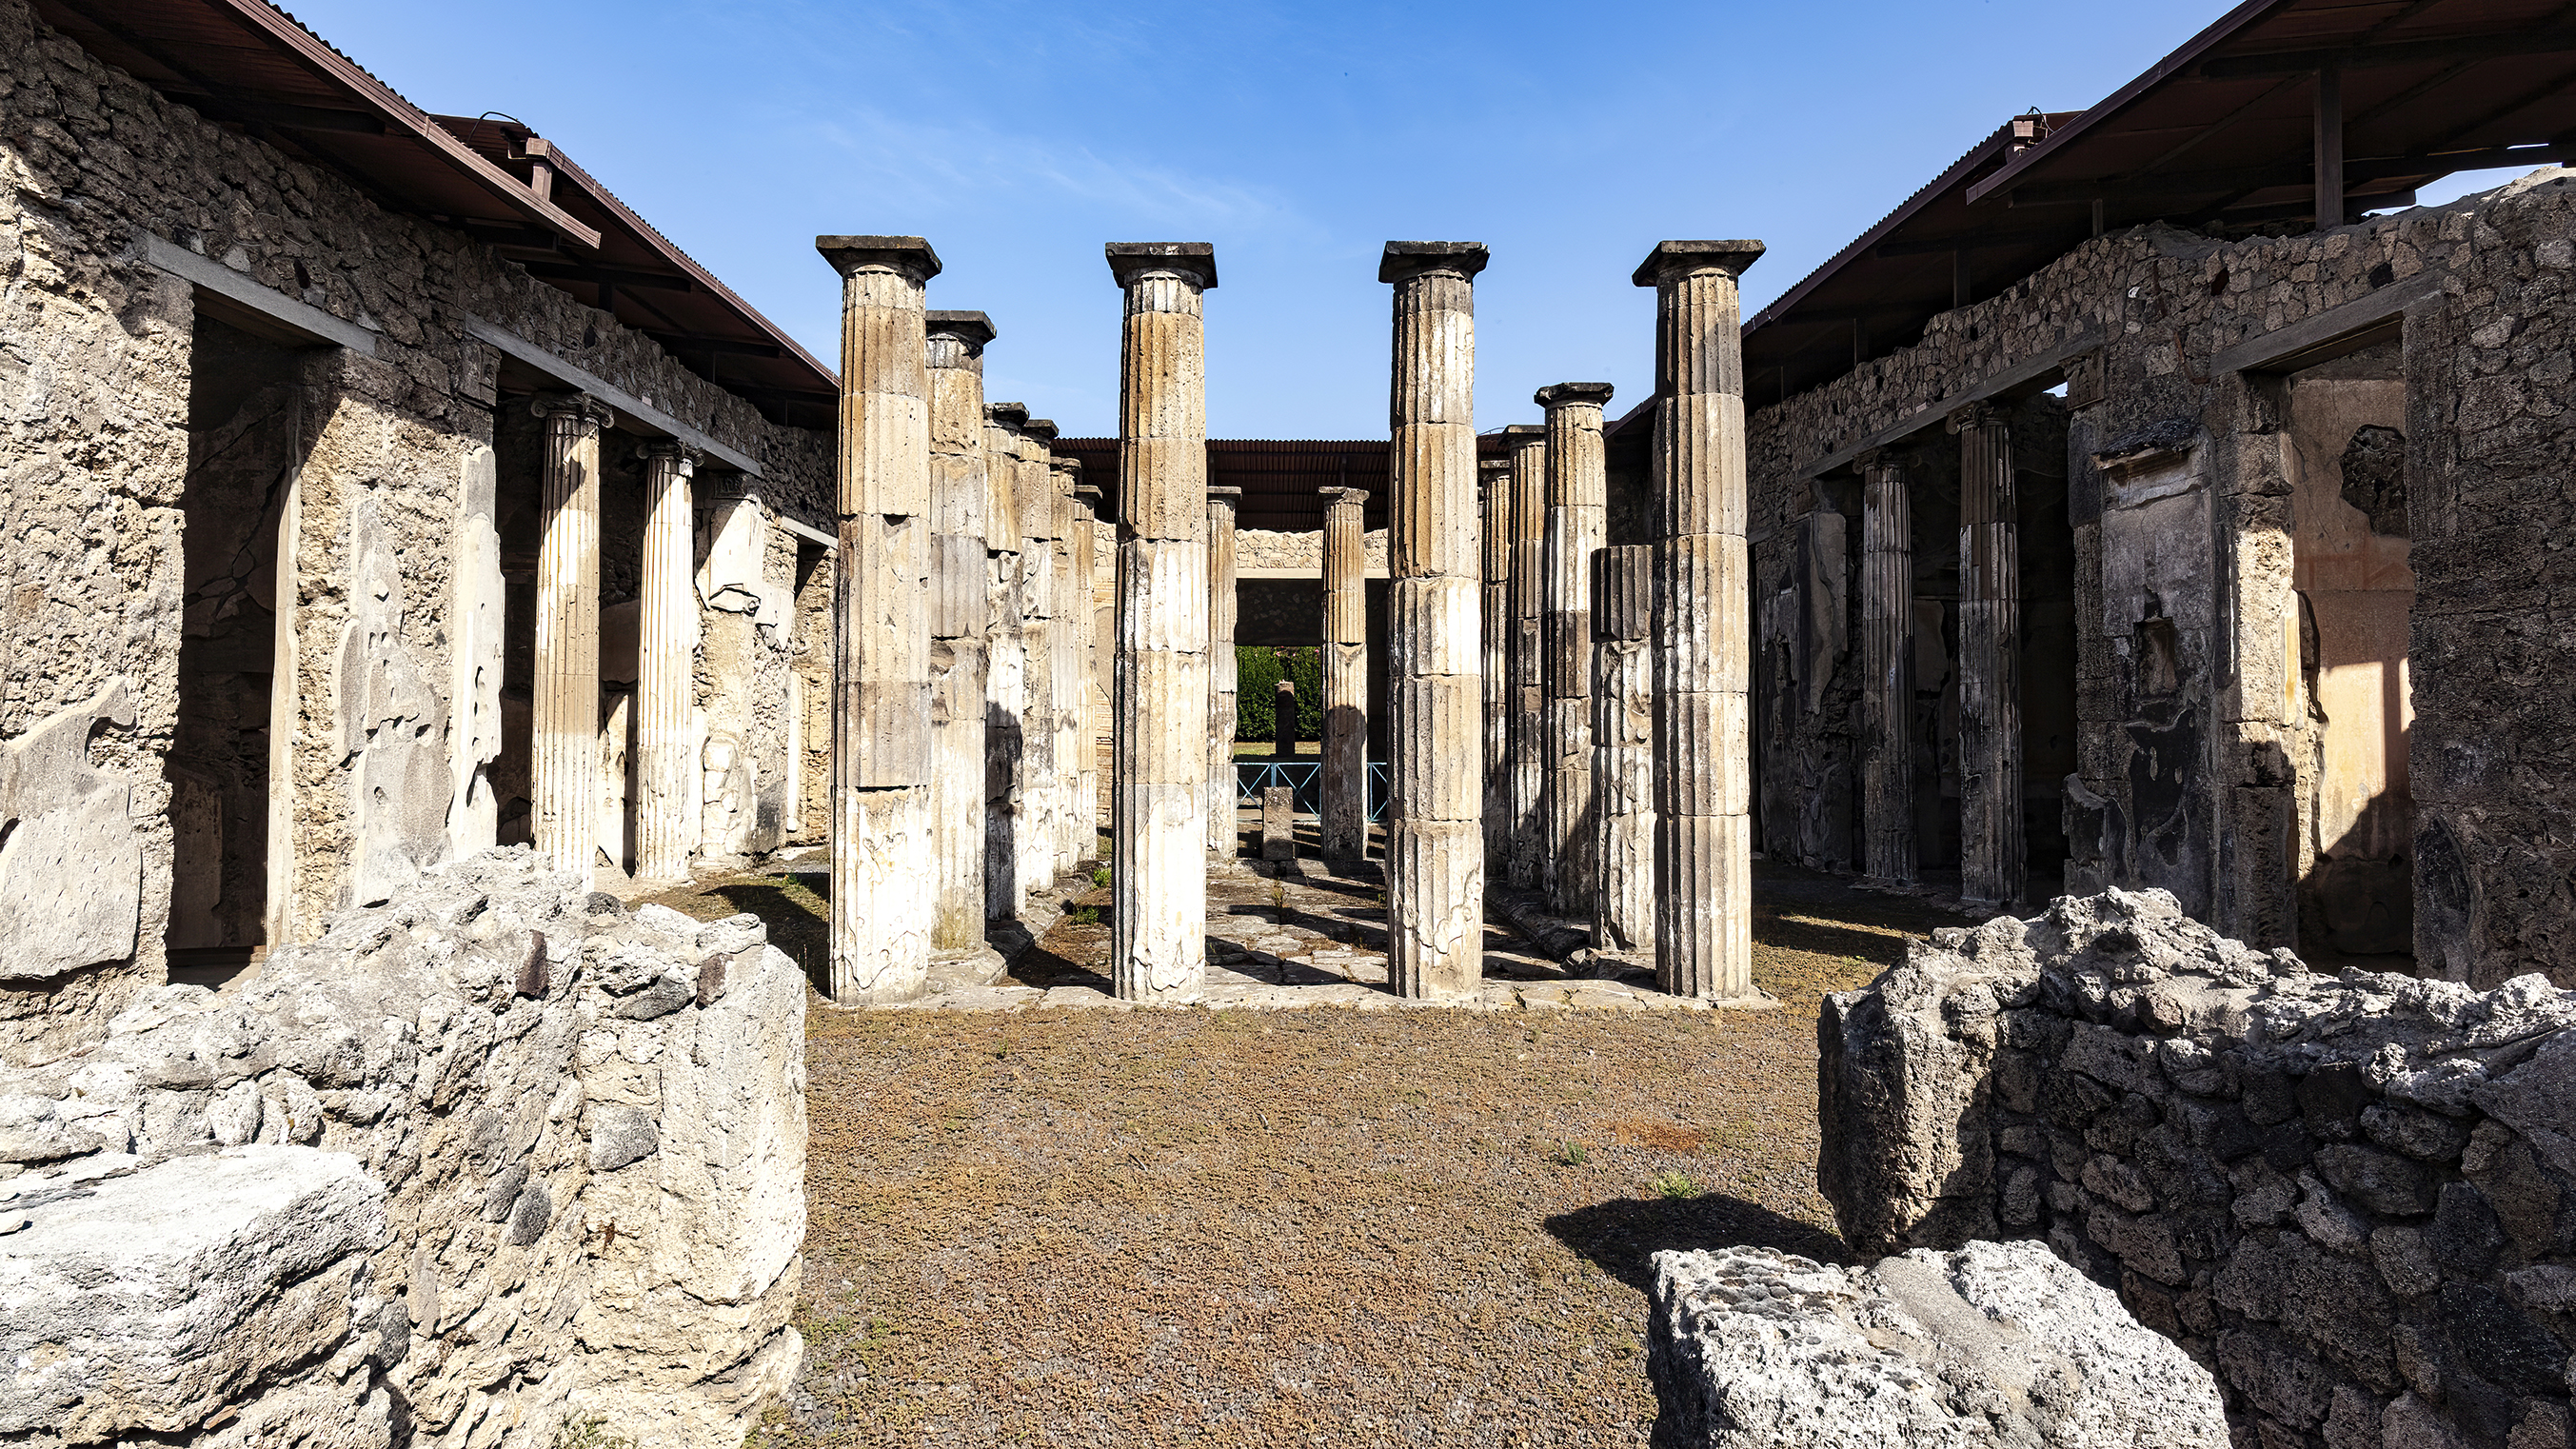 Ruins Roman city of Pompeii House of the Faun Comune di Pompei Campania Italy Sep 2011 01